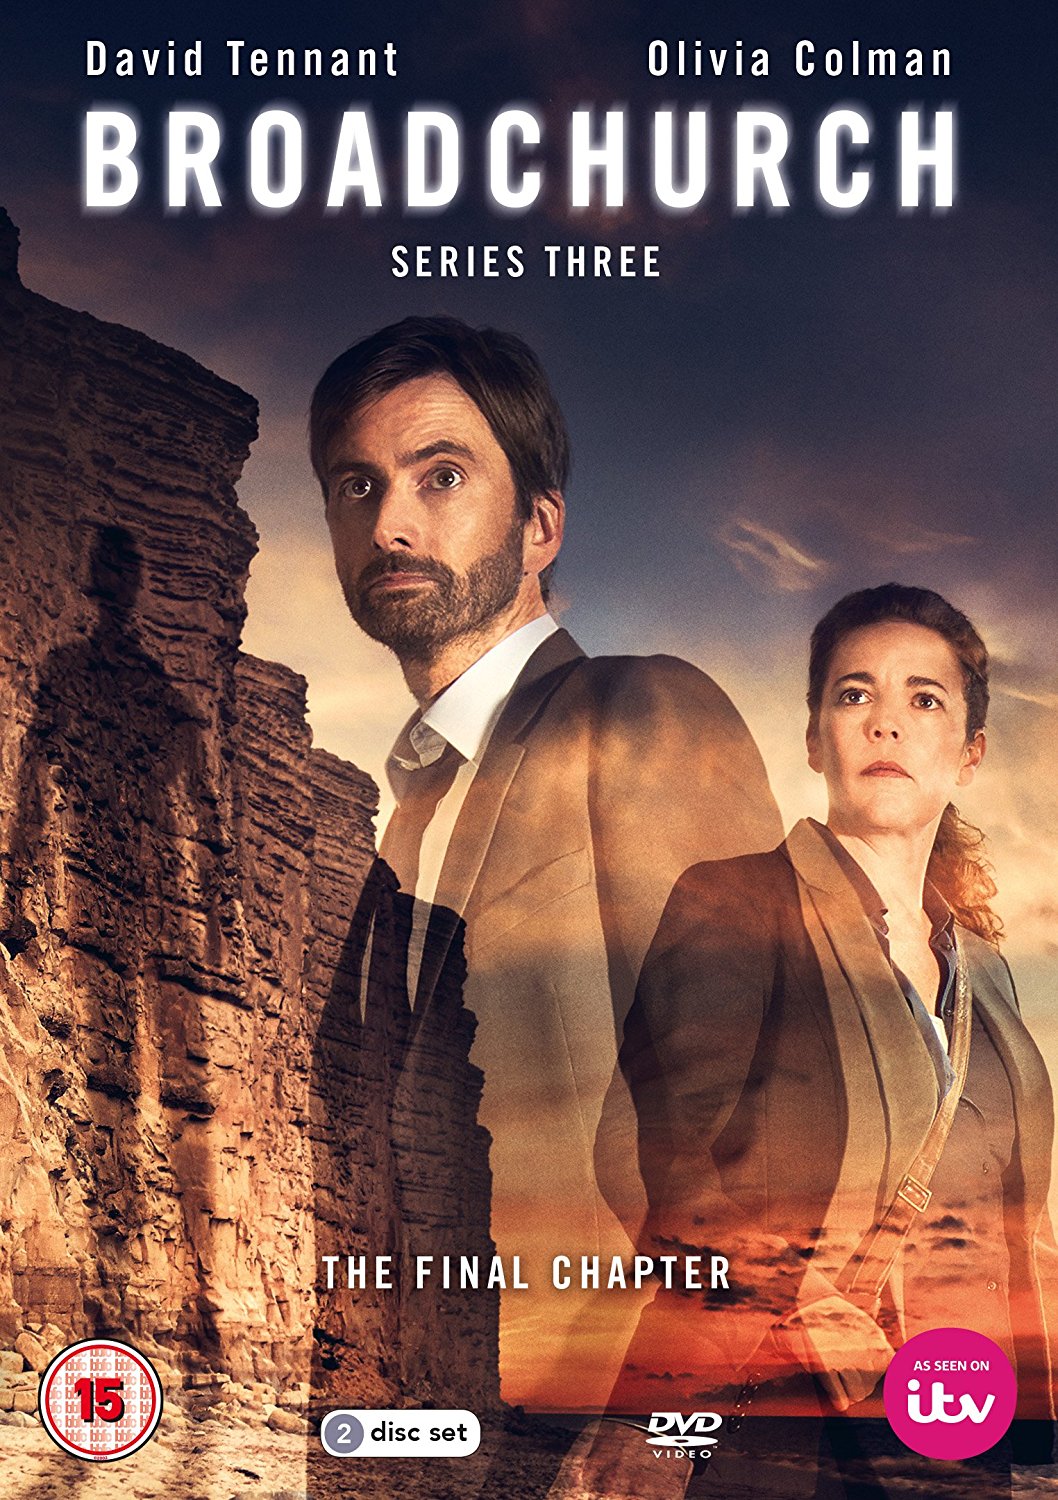 Series 3 DVD